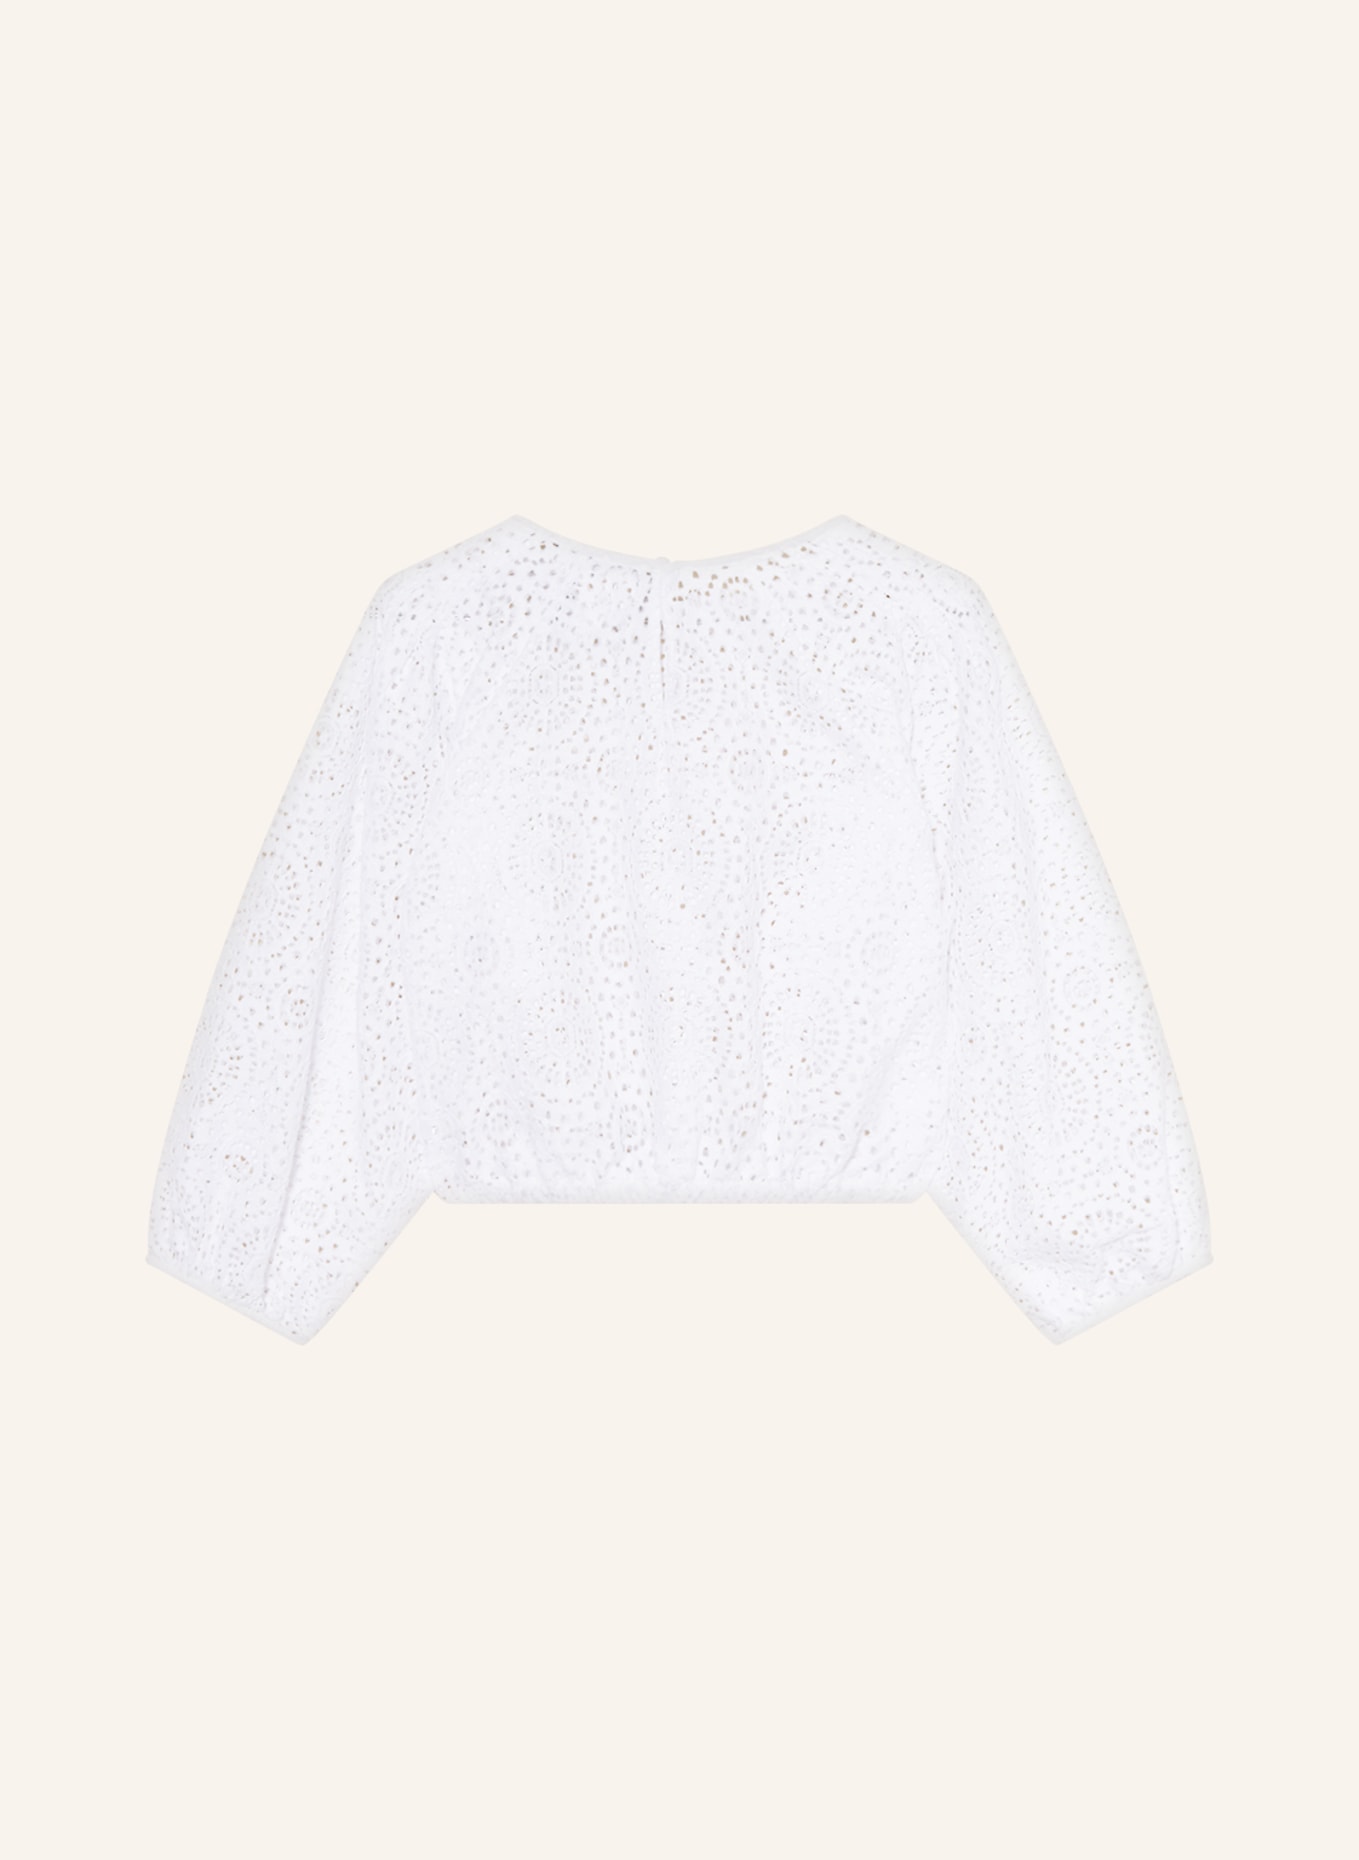 KINGA MATHE Dirndl blouse KINGA made of lace, Color: WHITE (Image 2)